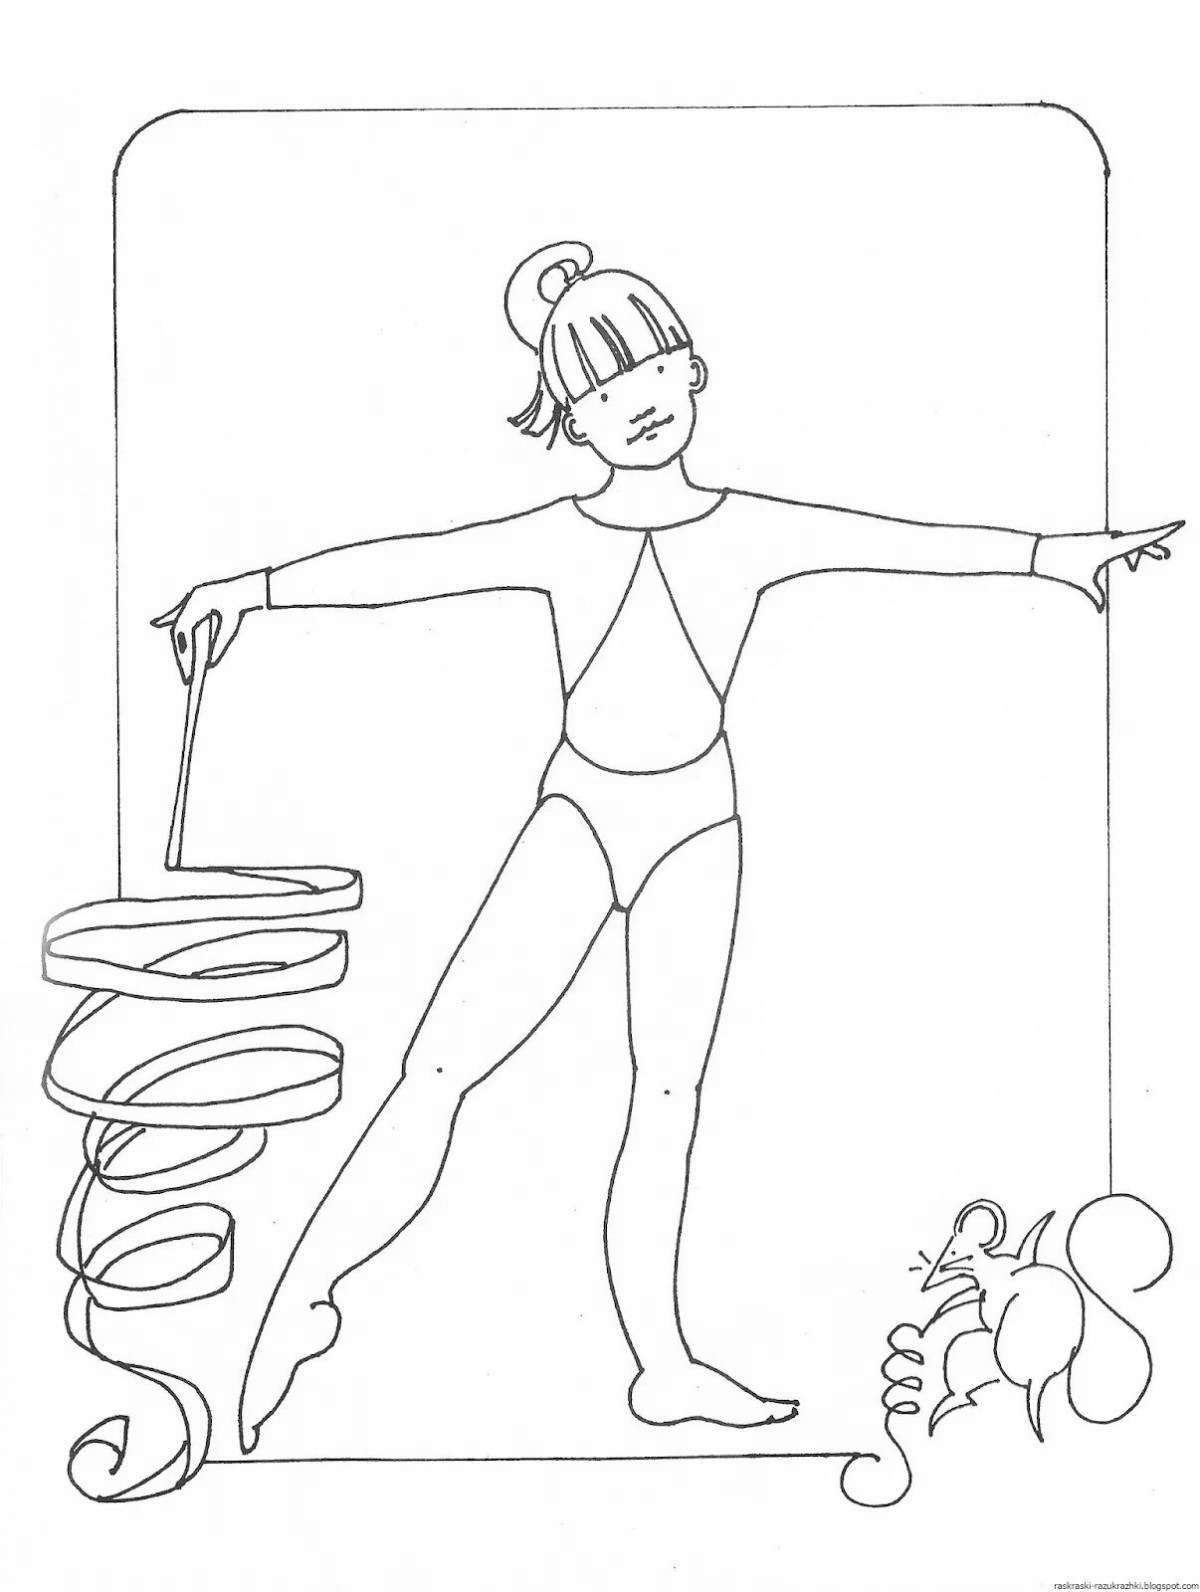 Joyful gymnast coloring pages for kids